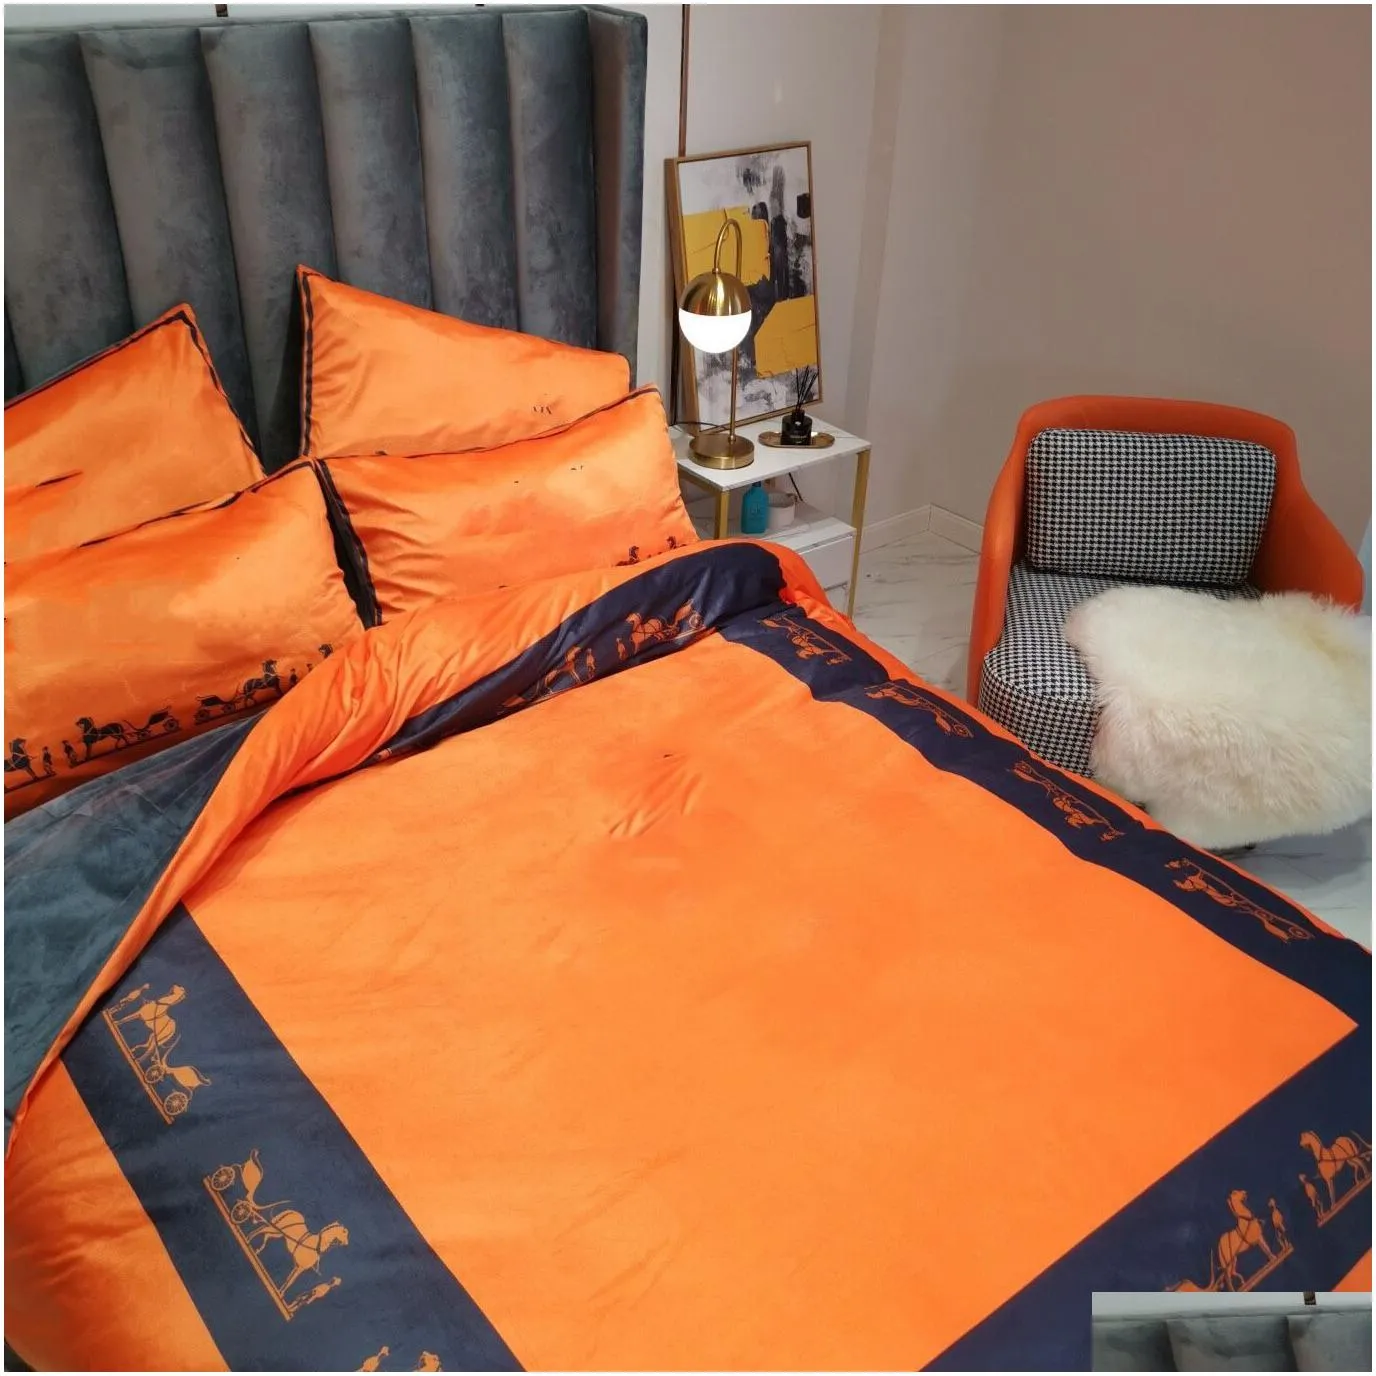 orange designer bedding sets velvet duvet cover queen size bed comforters set 4 pcs pillow cases